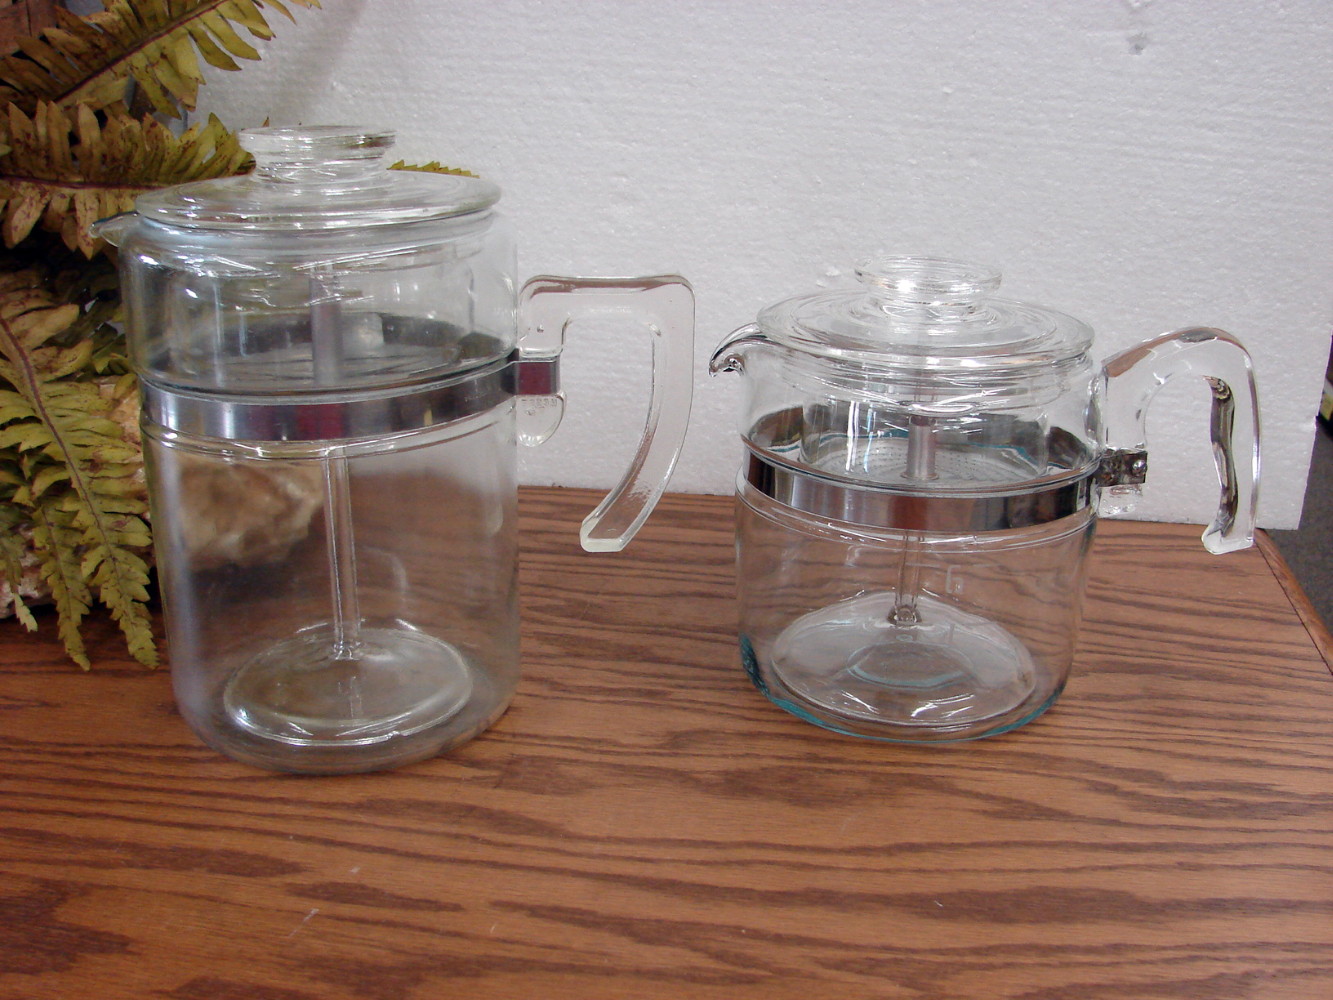  Vintage 9 cup Glass Percolator Coffee Pot complete  read  description: Home & Kitchen